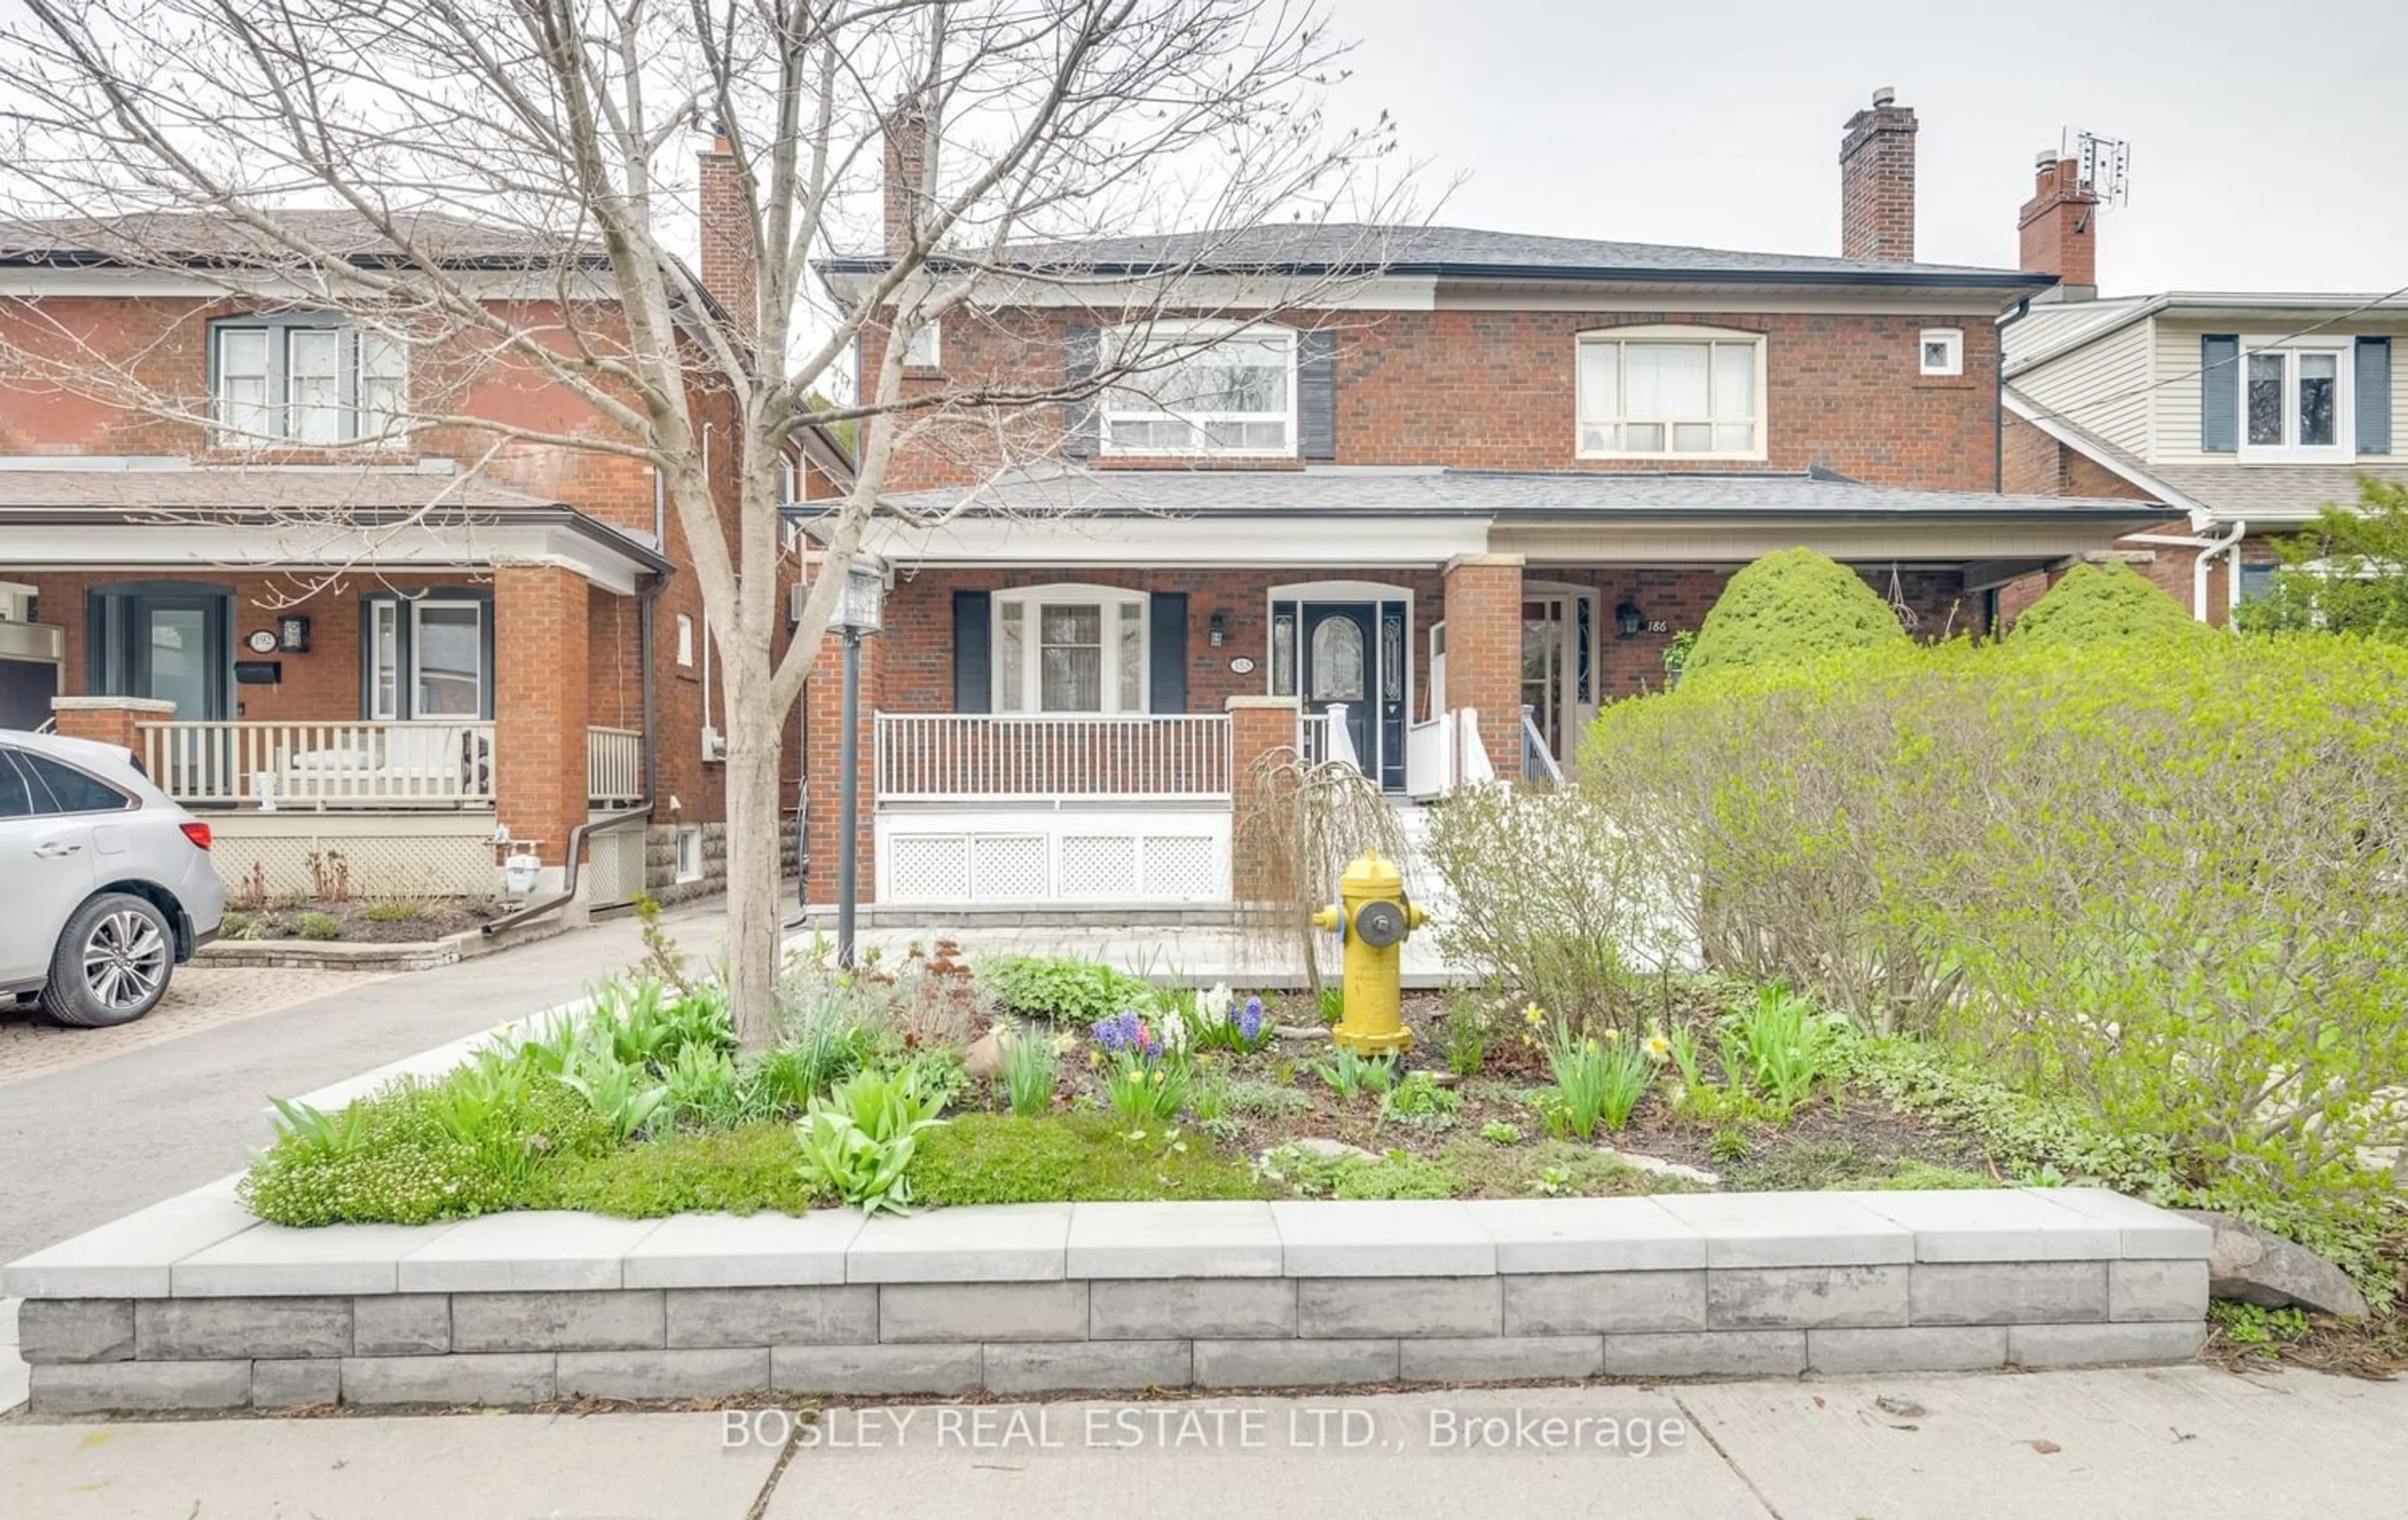 Home with brick exterior material for 188 Melrose Ave, Toronto Ontario M5M 1Z1